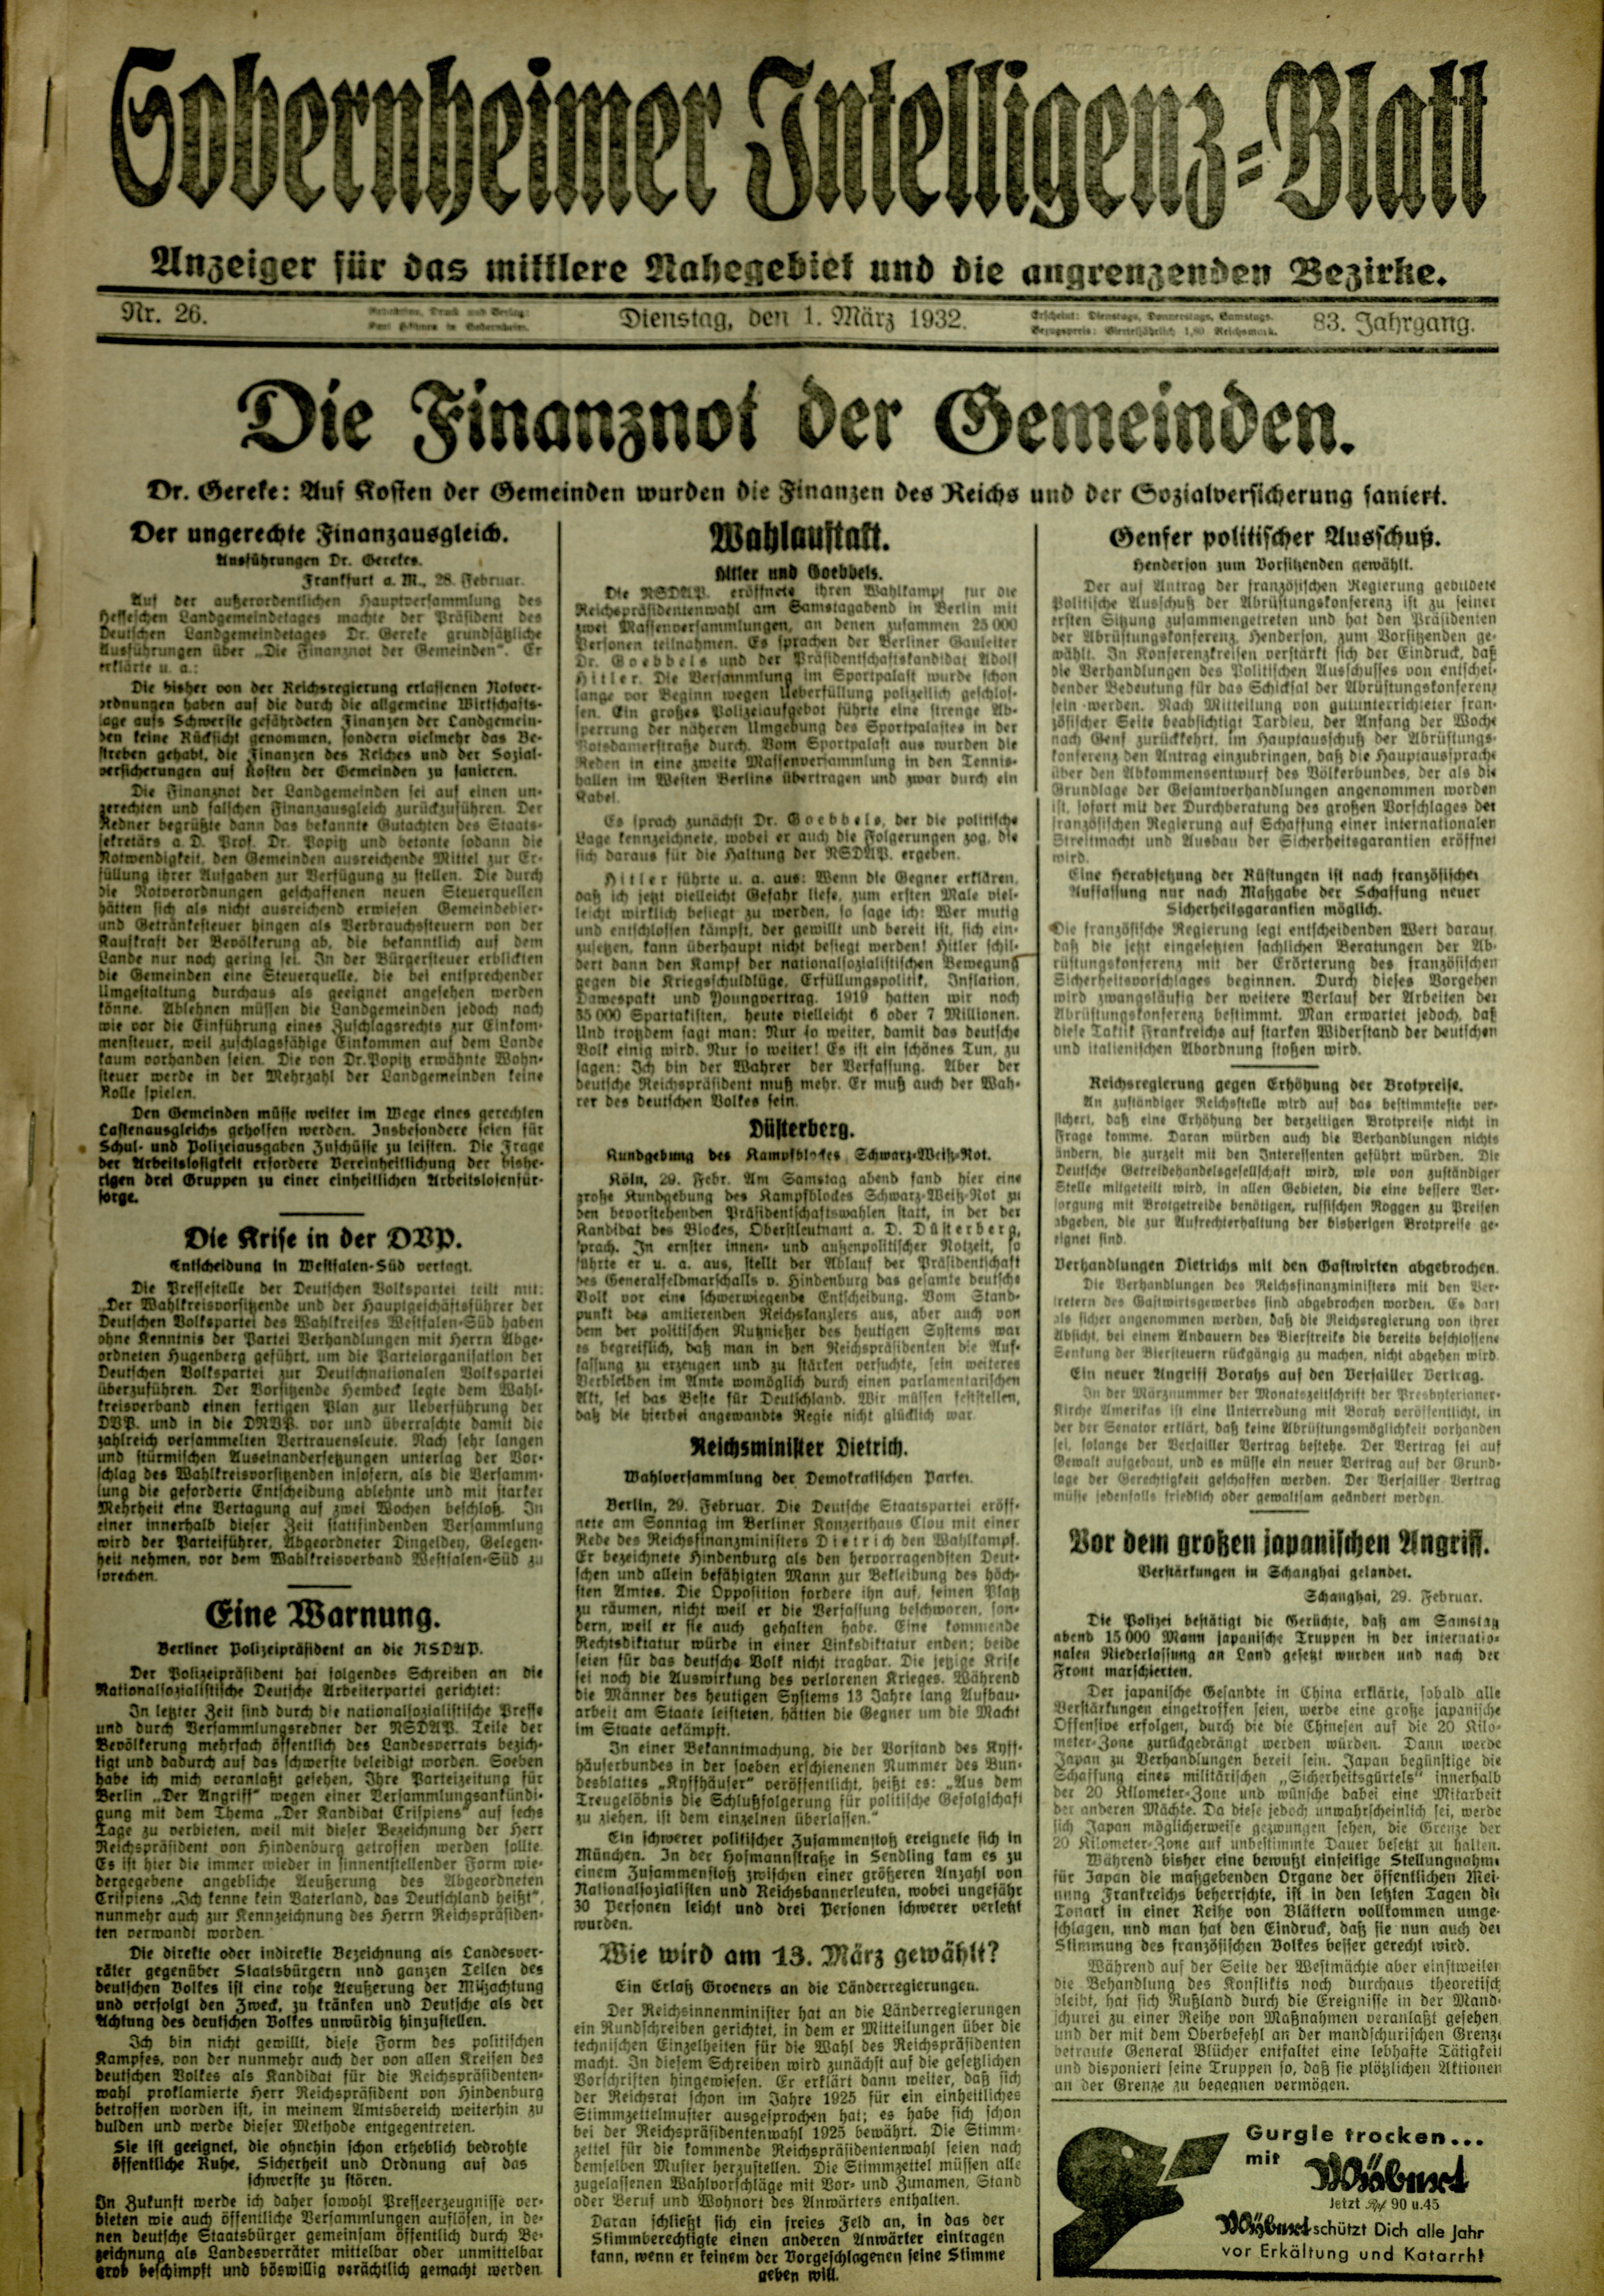 Zeitung: Sobernheimer Intelligenzblatt; März 1932, Jg. 83 Nr. 26 (Heimatmuseum Bad Sobernheim CC BY-NC-SA)